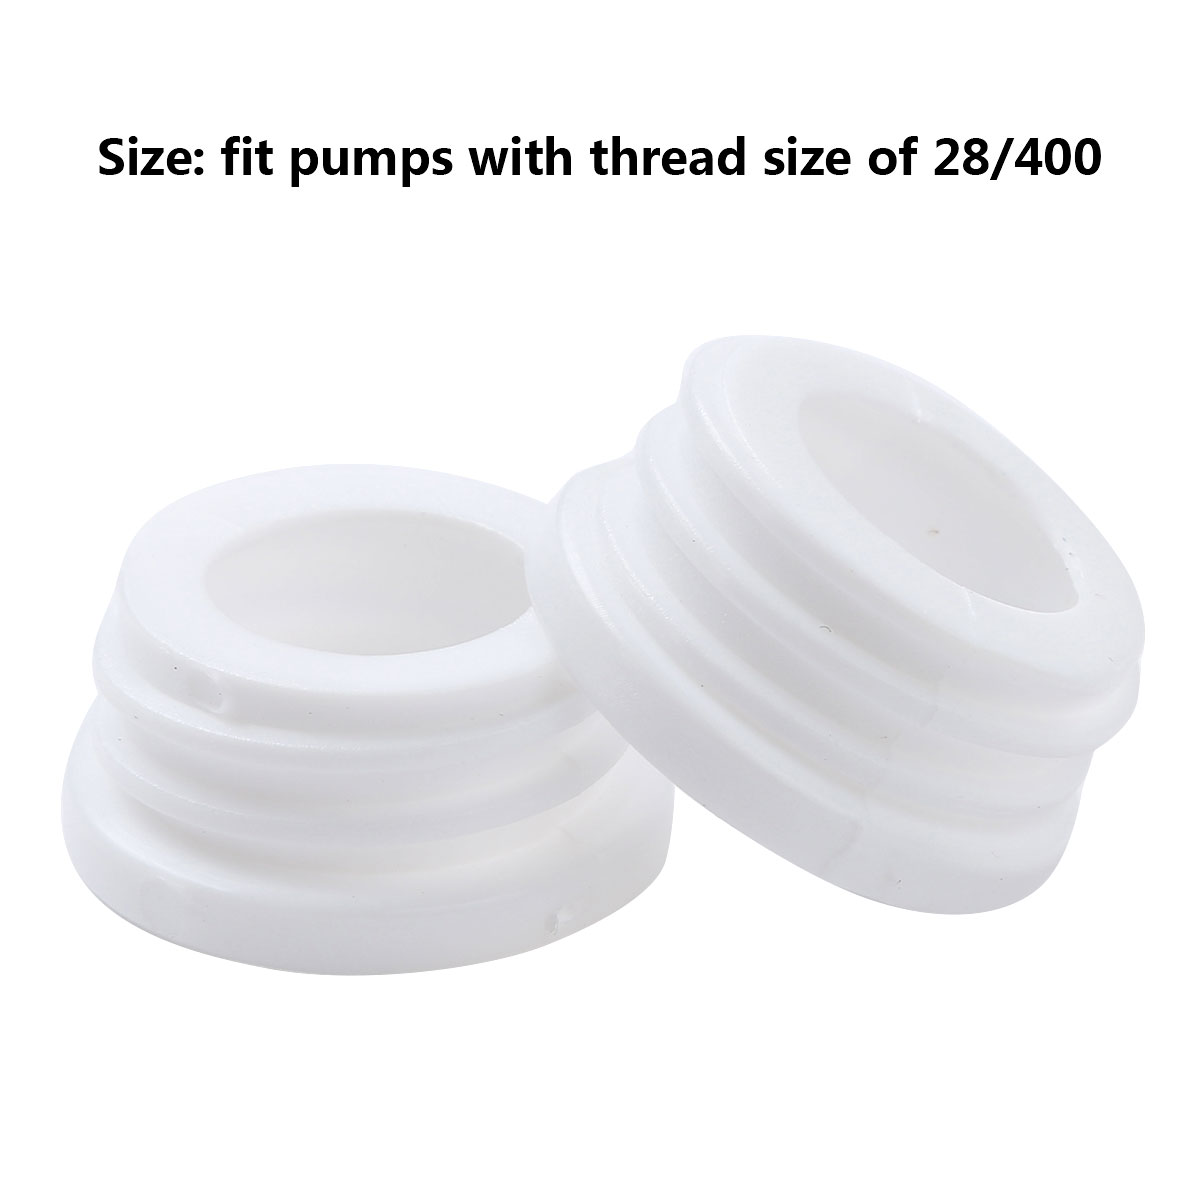 20x For 28/400 Threaded Mason Jars Plastic Collar Rings Soap Dispenser Pumps DIY 